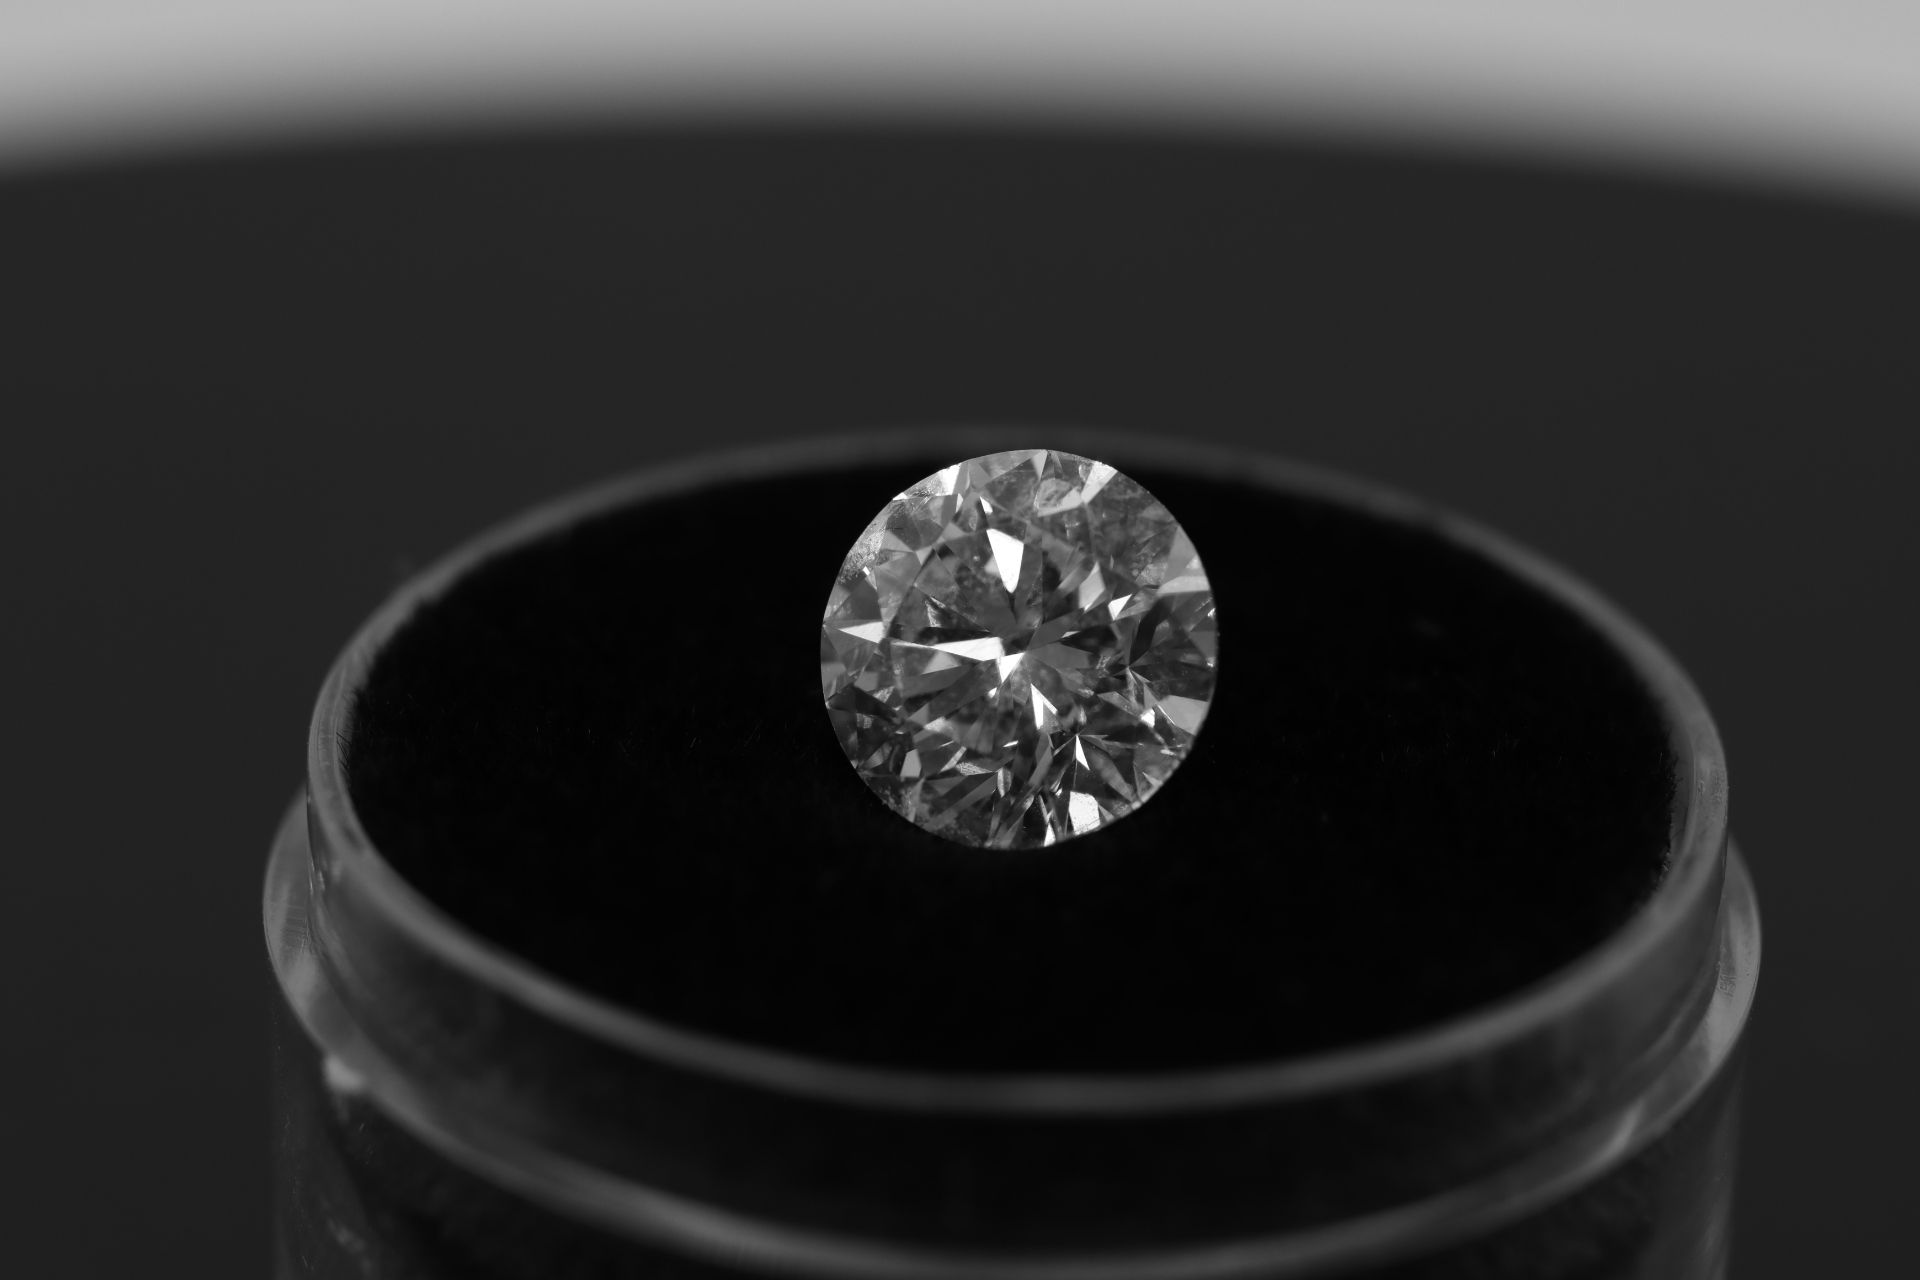 Single - Round Brilliant Cut Natural Diamond 2.00 Carat Colour D Clarity VS2 - AGI Cert DL190531057 - Image 10 of 12